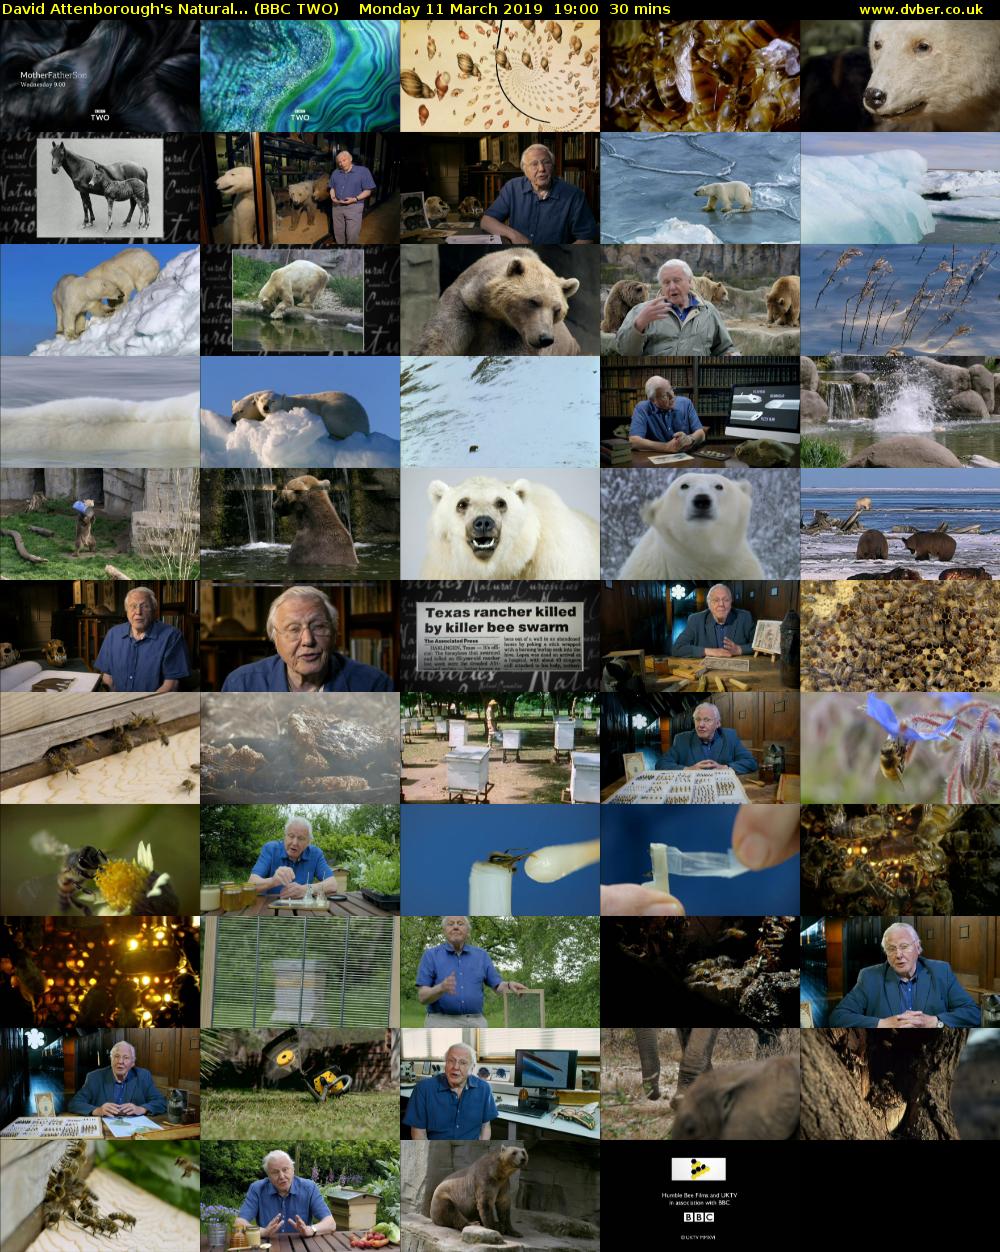 David Attenborough's Natural... (BBC TWO) Monday 11 March 2019 19:00 - 19:30